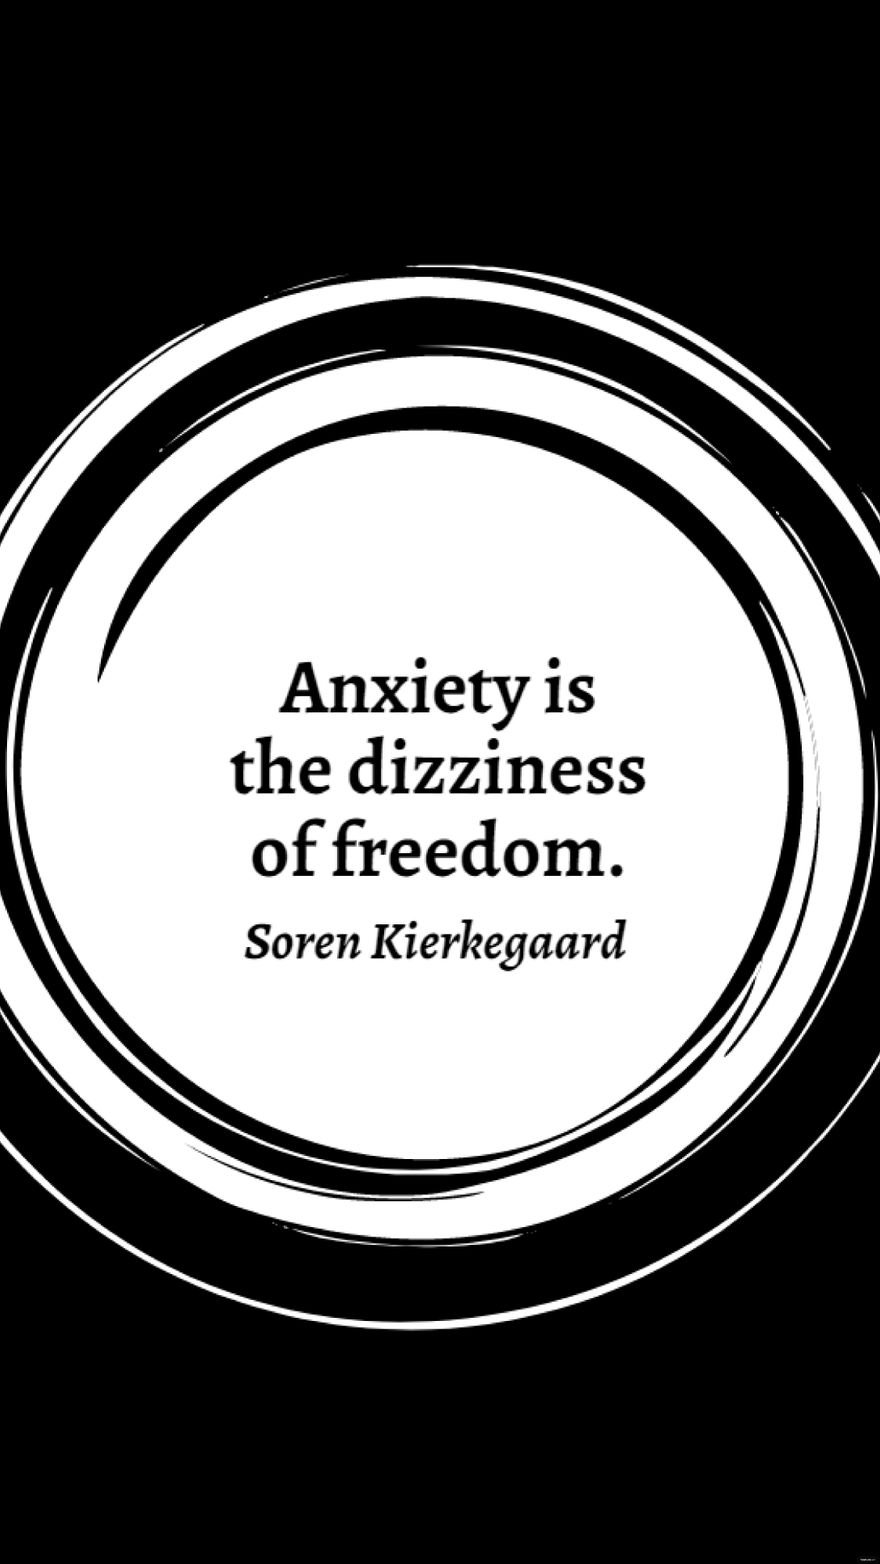 Soren Kierkegaard - Anxiety is the dizziness of freedom. in JPG - Download